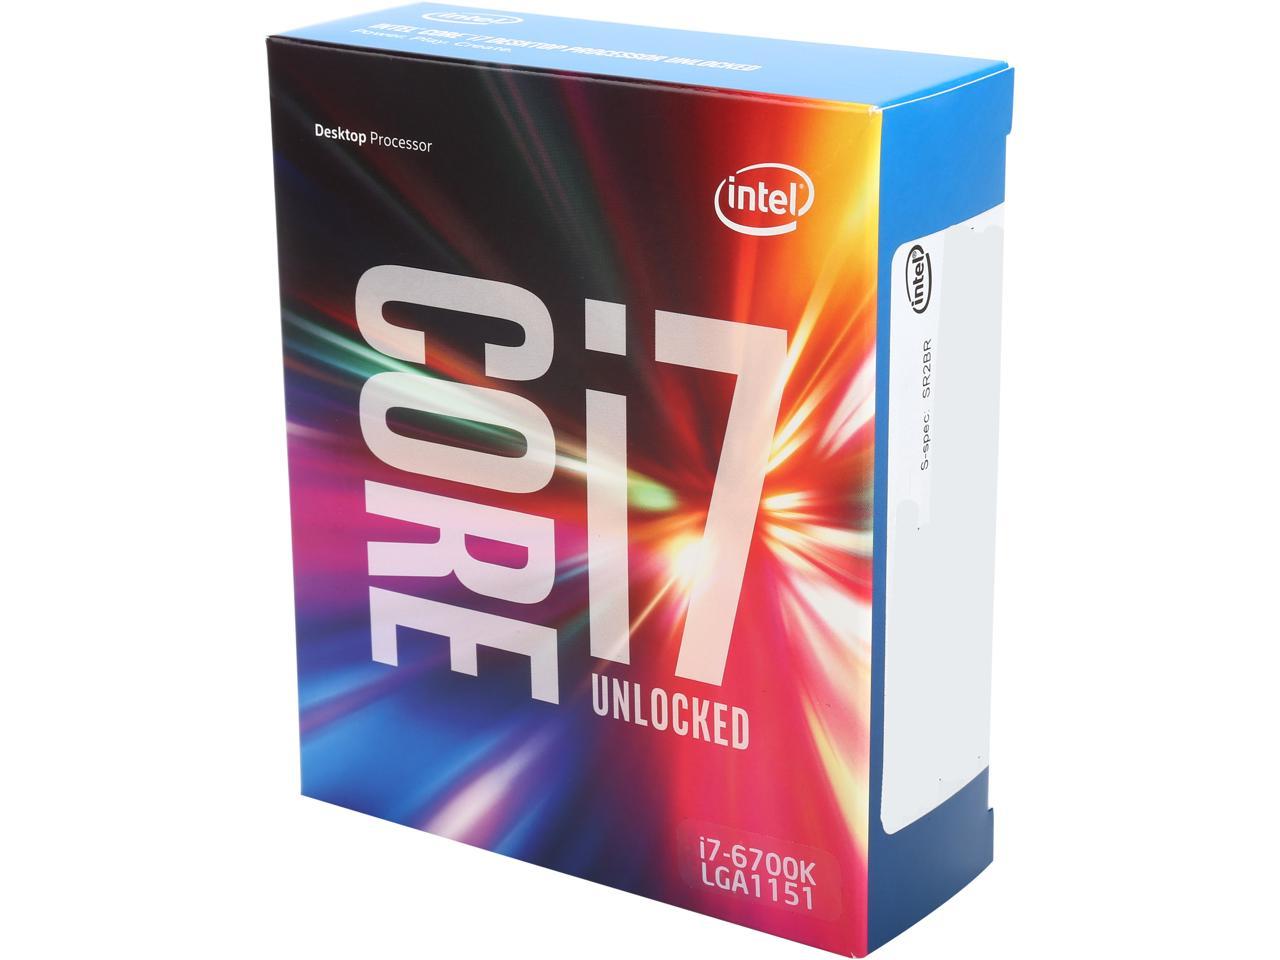 Intel Core i7-6700K 8M 4.0 GHz LGA 1151 Desktop Processor - Newegg.com